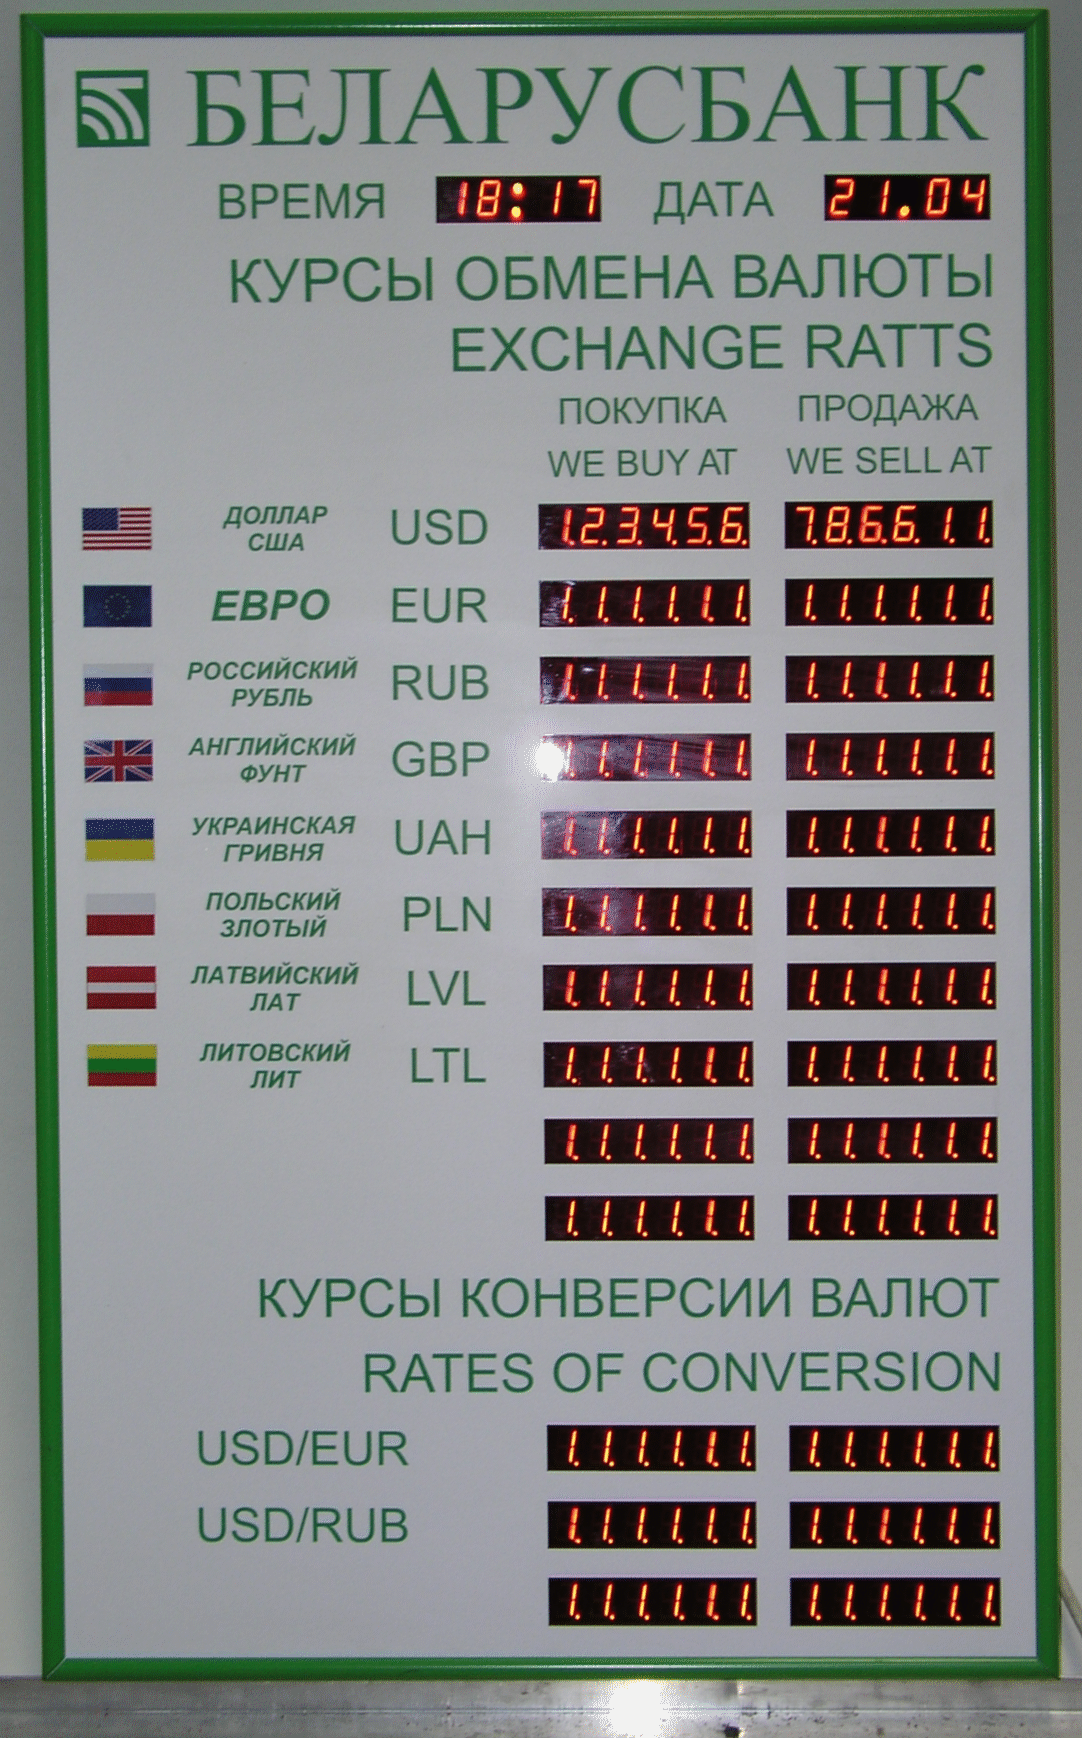 Беларусбанк обмен валют курс на сегодня 9400 рублей в биткоинах